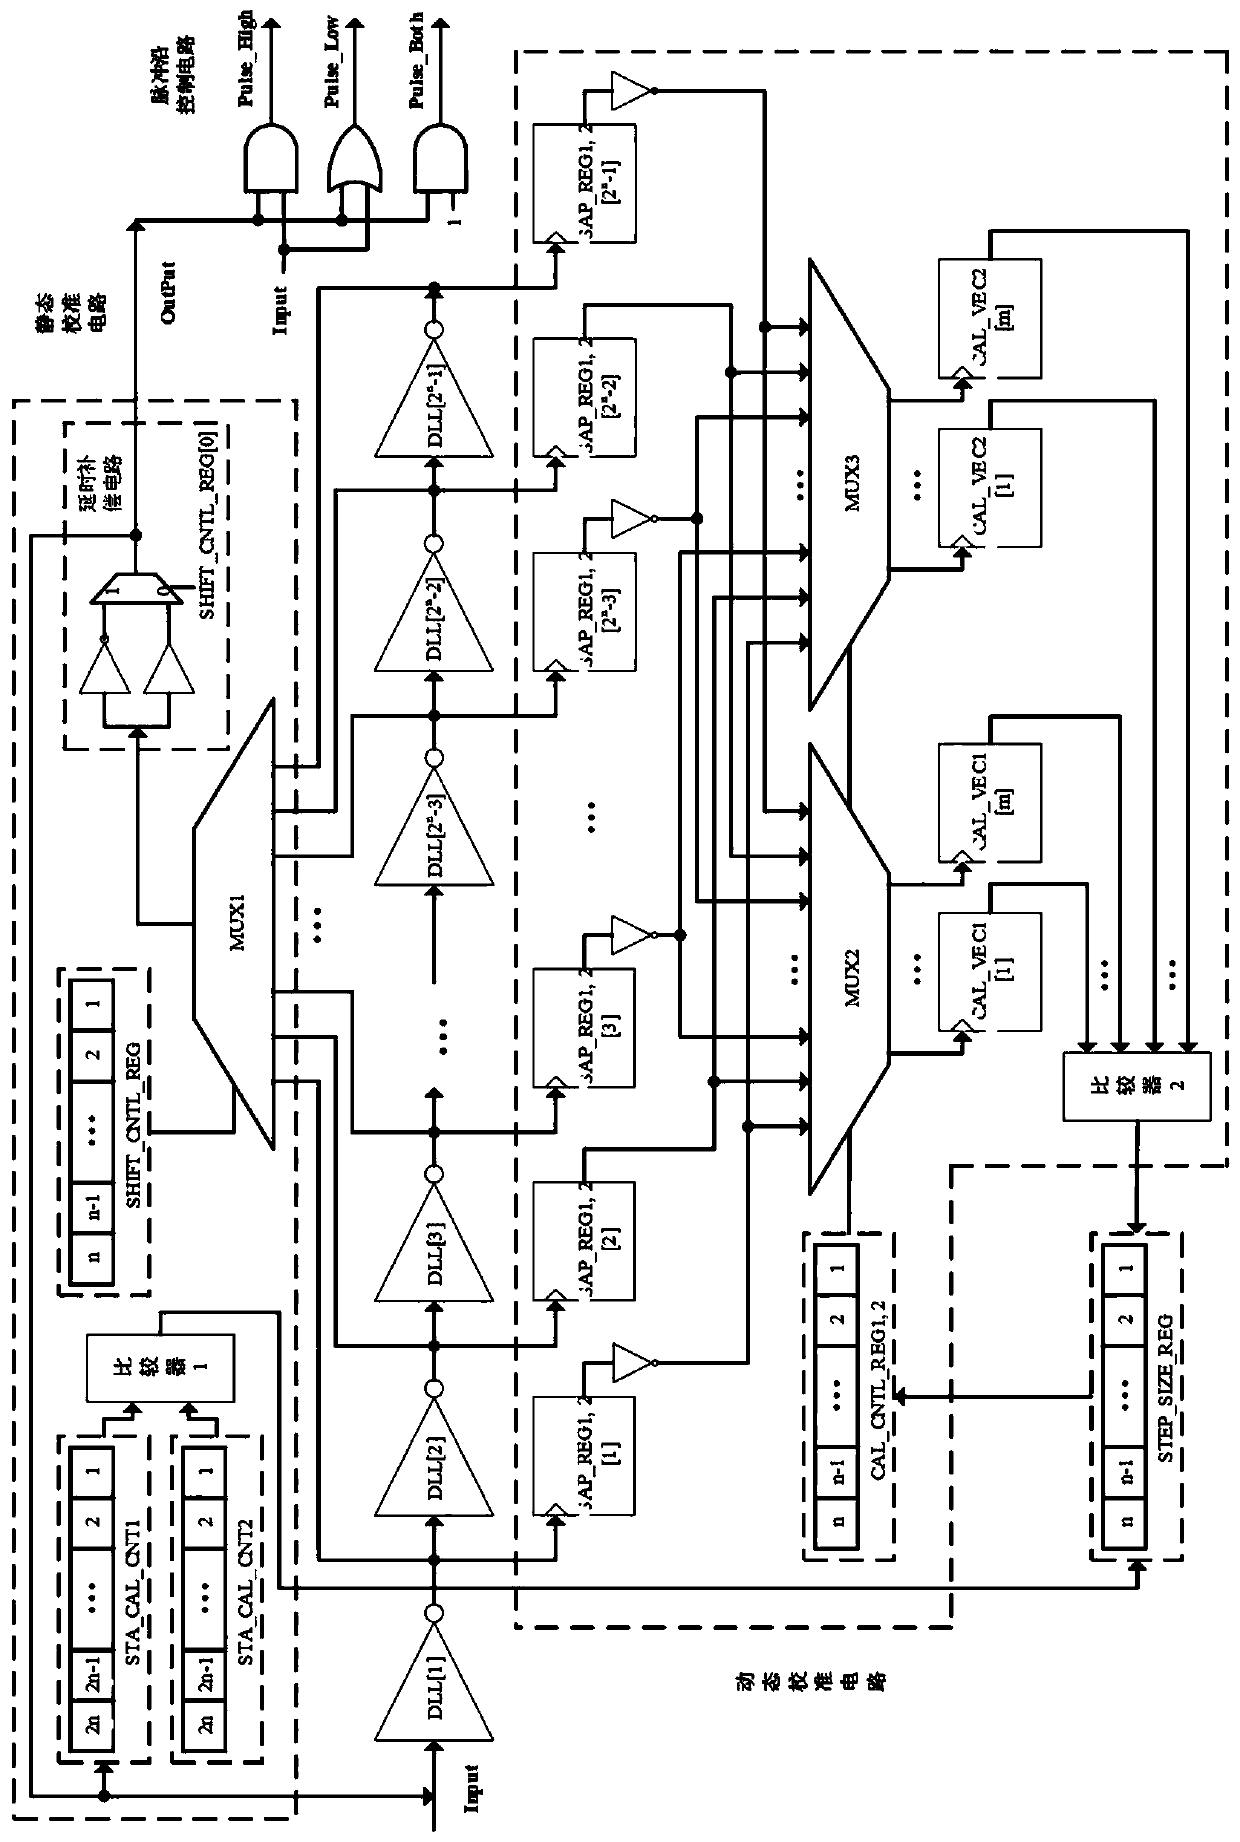 Ultrahigh-precision digital pulse signal generation circuit and method